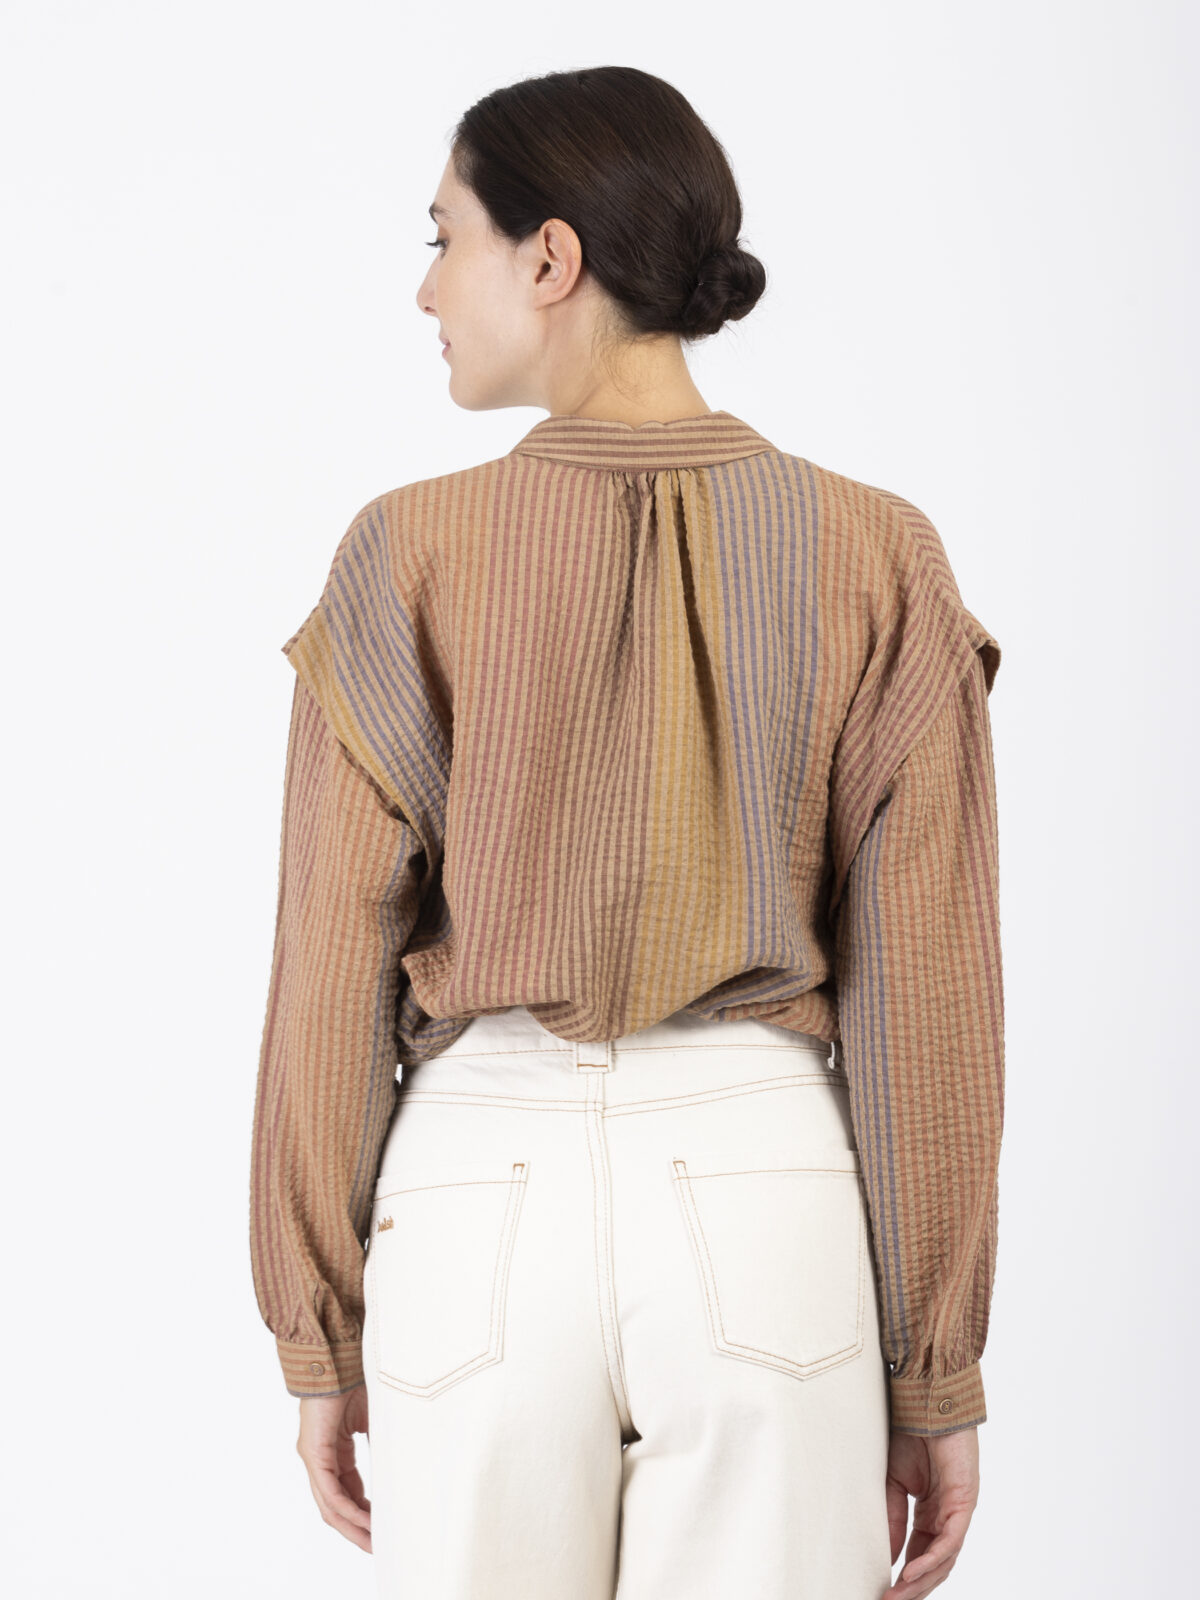 pintalina-brown-stripe-shirt-wide-pleats-sessun-matchboxathens